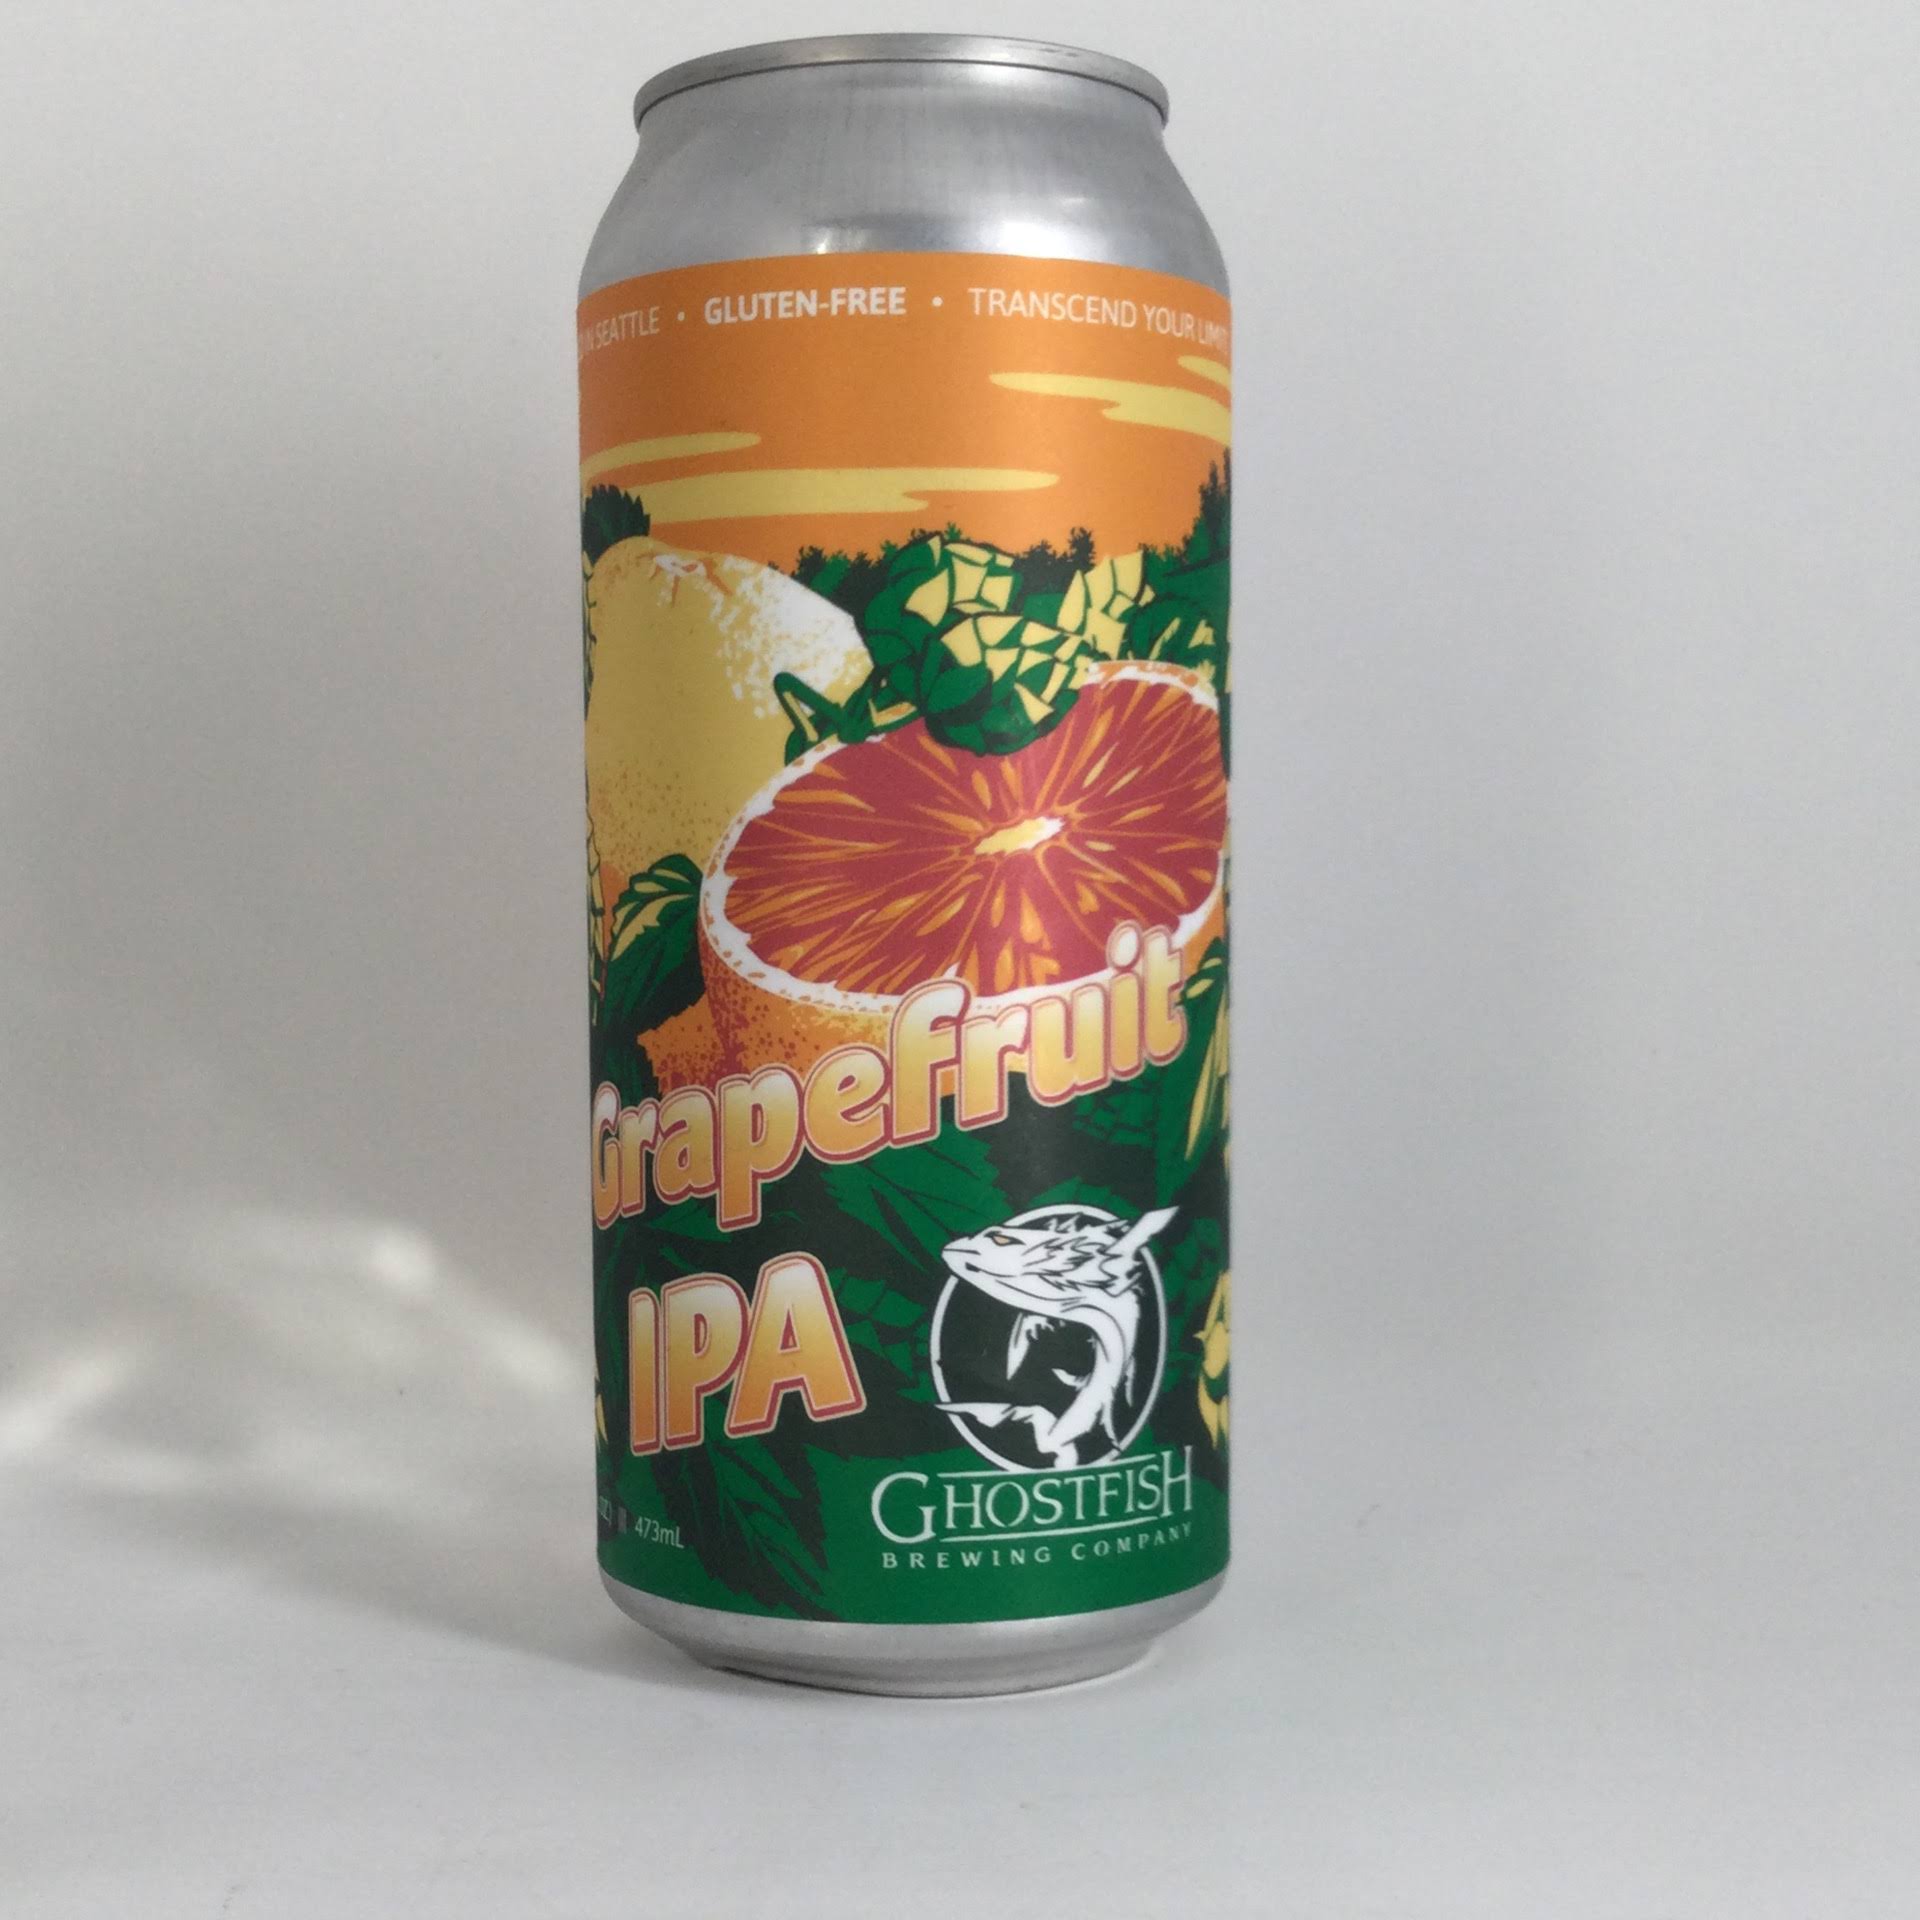 Beer Ghostfish Brewing Co - Gluten-Free Grapefruit IPA